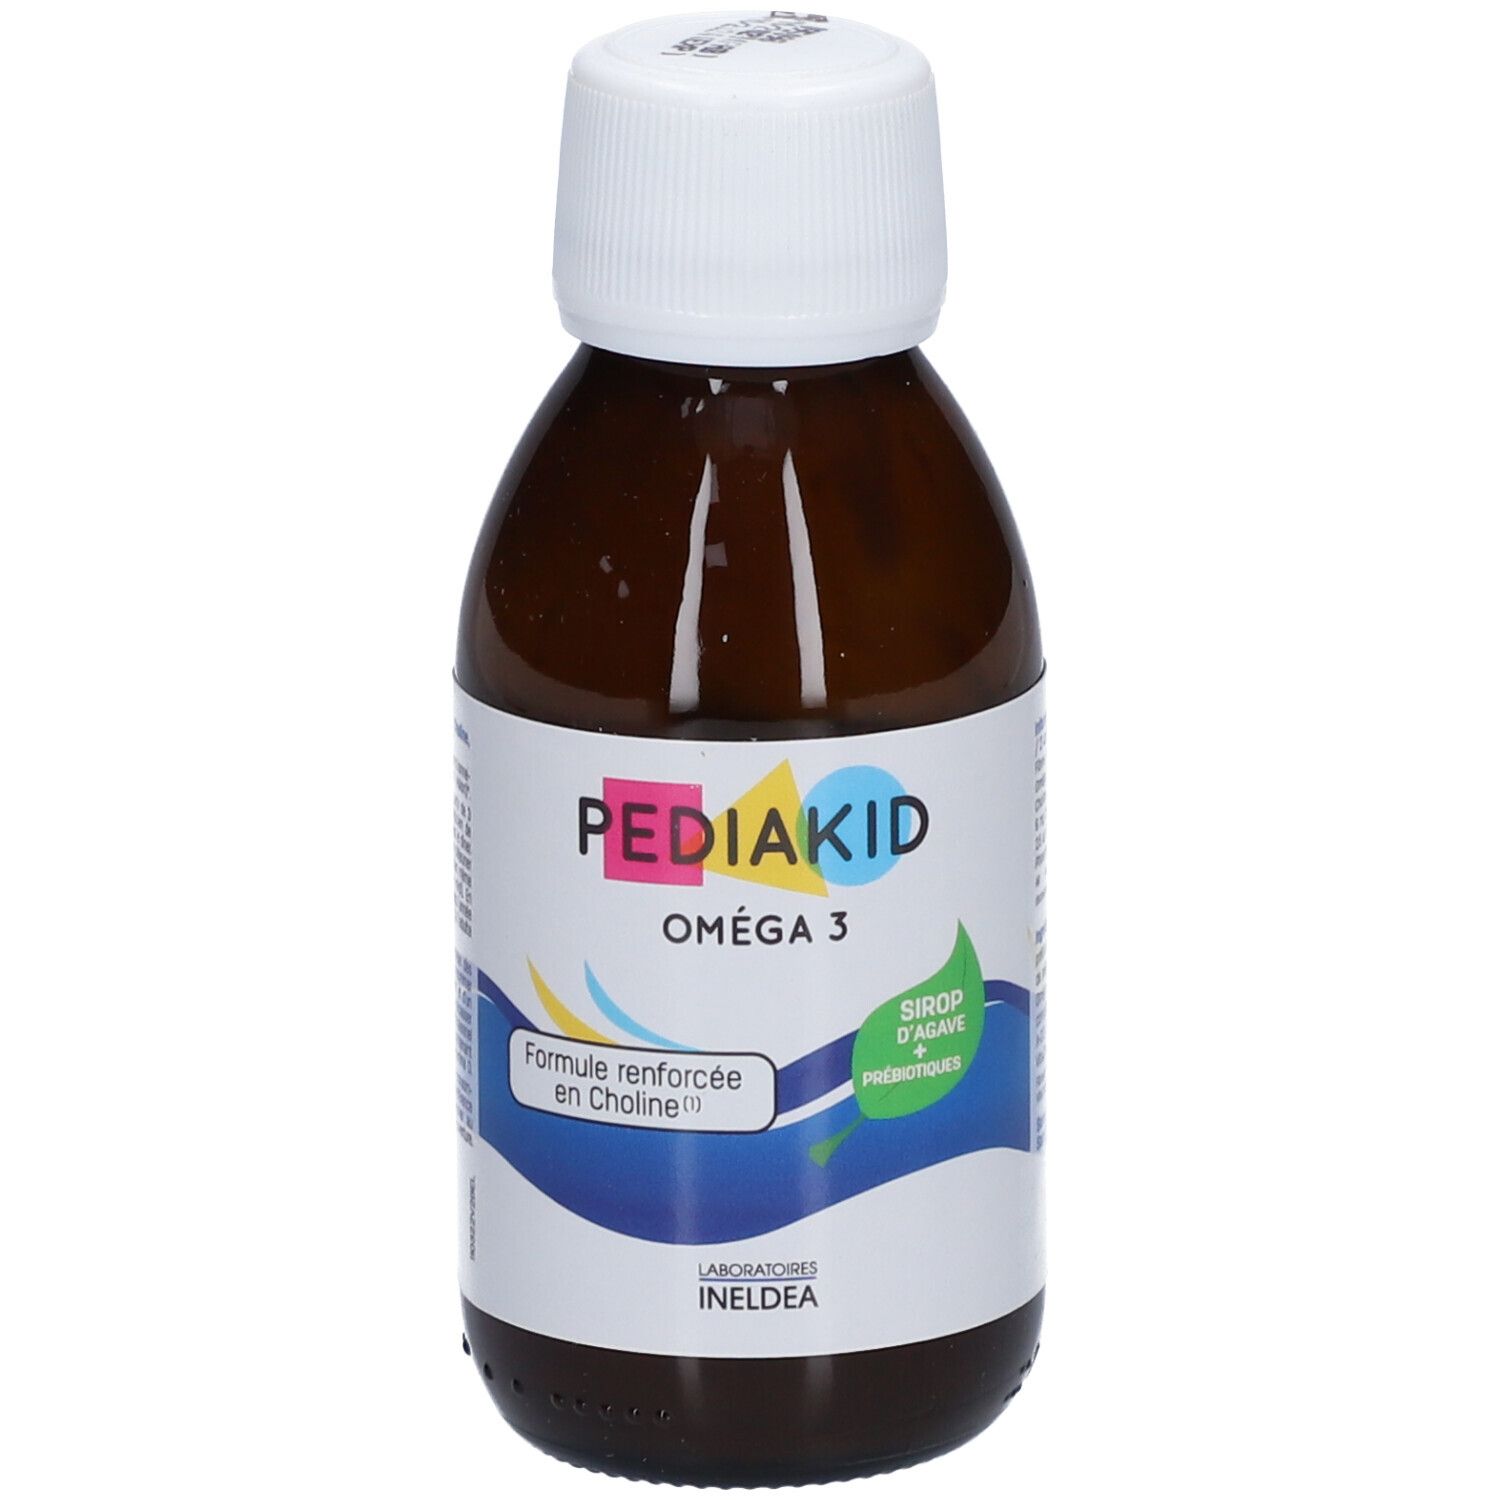 PEDIAKID Omega-3 Solution